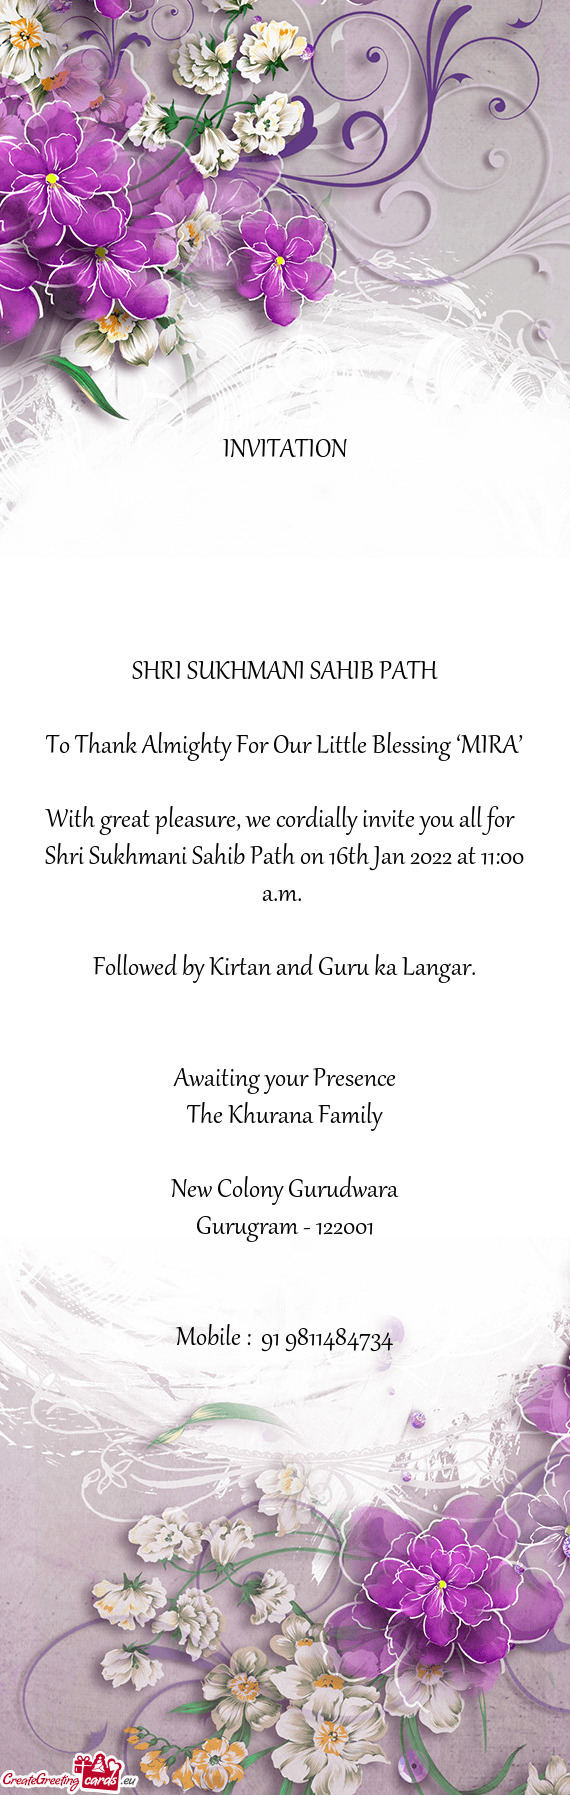 Shri Sukhmani Sahib Path on 16th Jan 2022 at 11:00 a.m